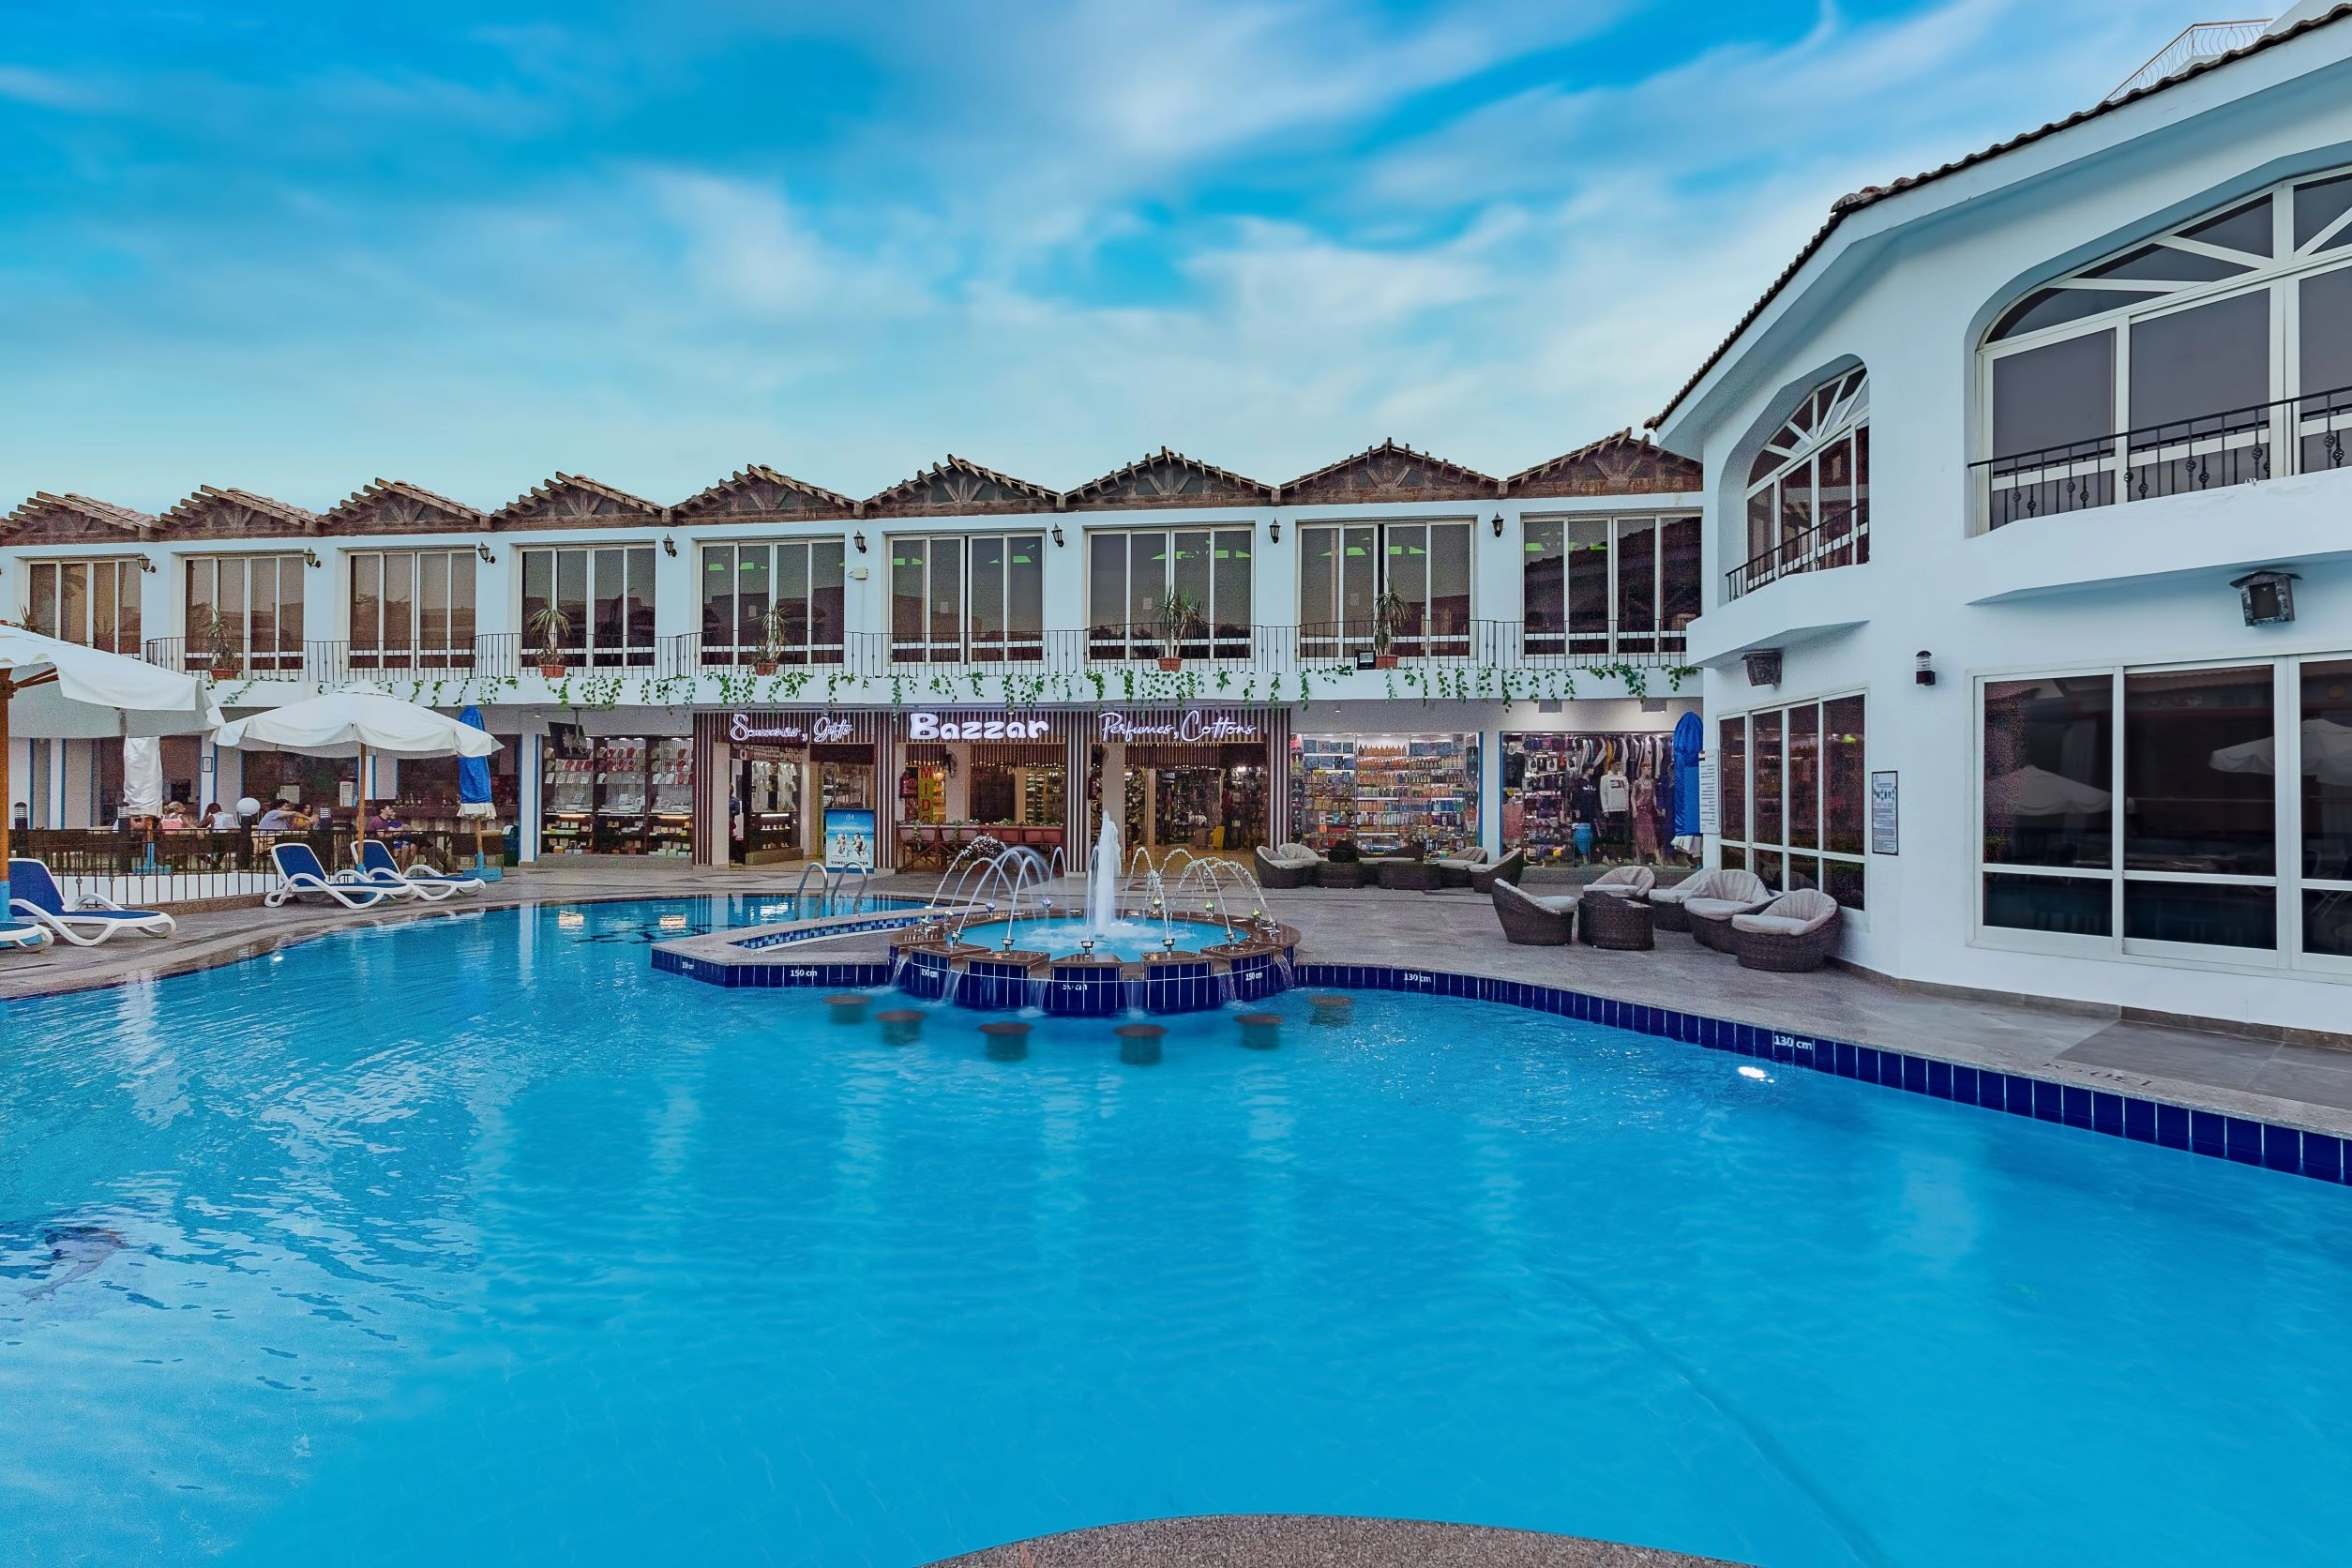 Main Swimming Pool,Heated Pool in winter season ,Adult Pool,Pool Bar,Minamark Hotel in Hurghada  